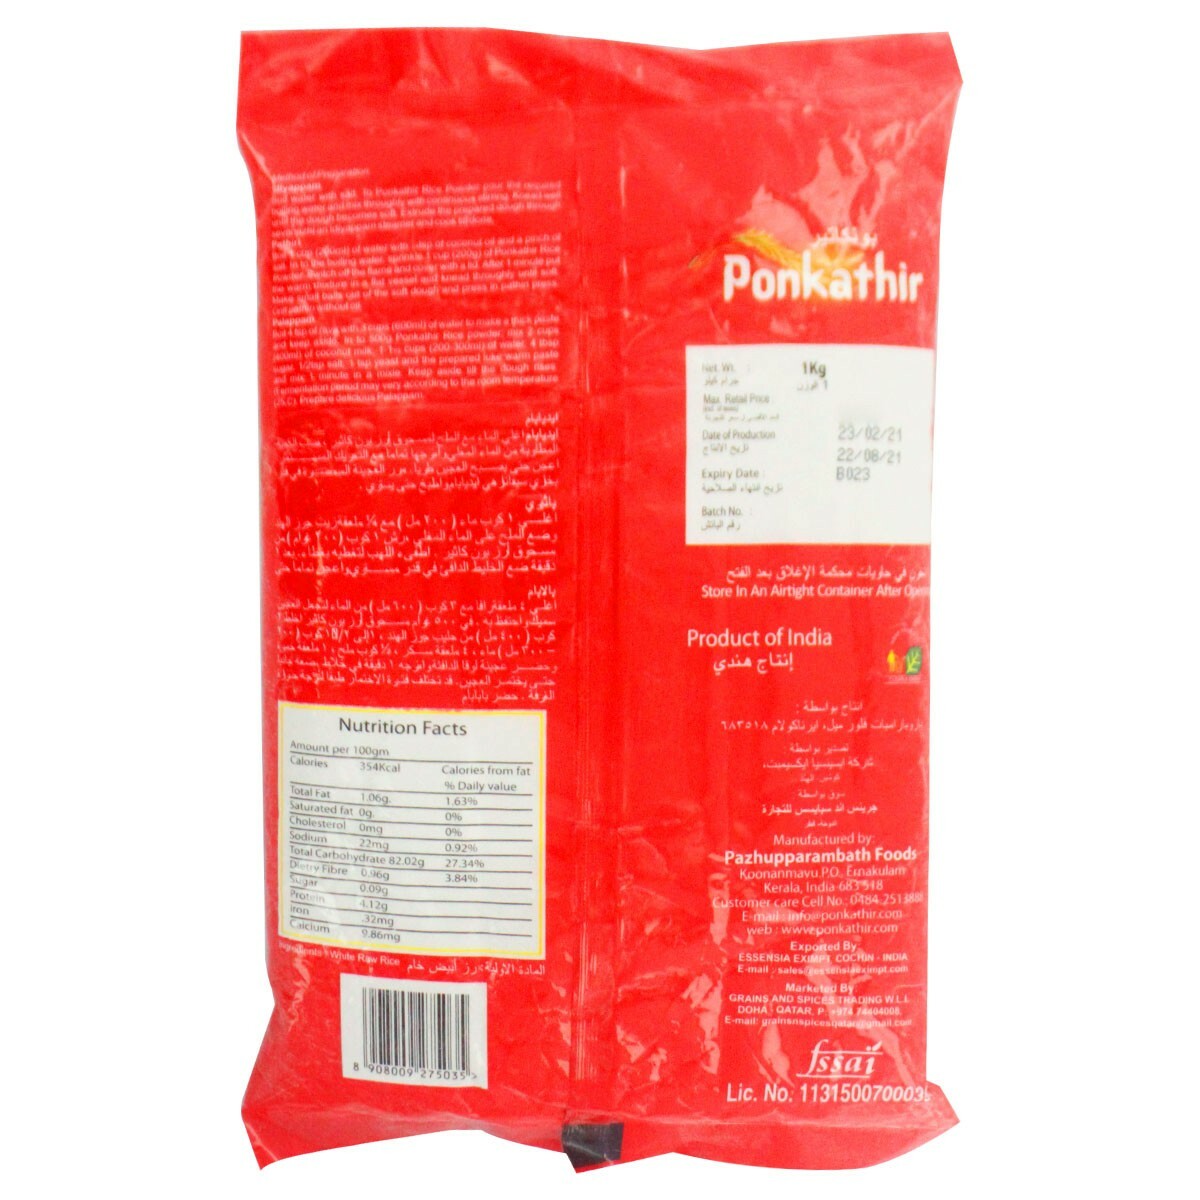 Ponkathir Rice Powder 1kg